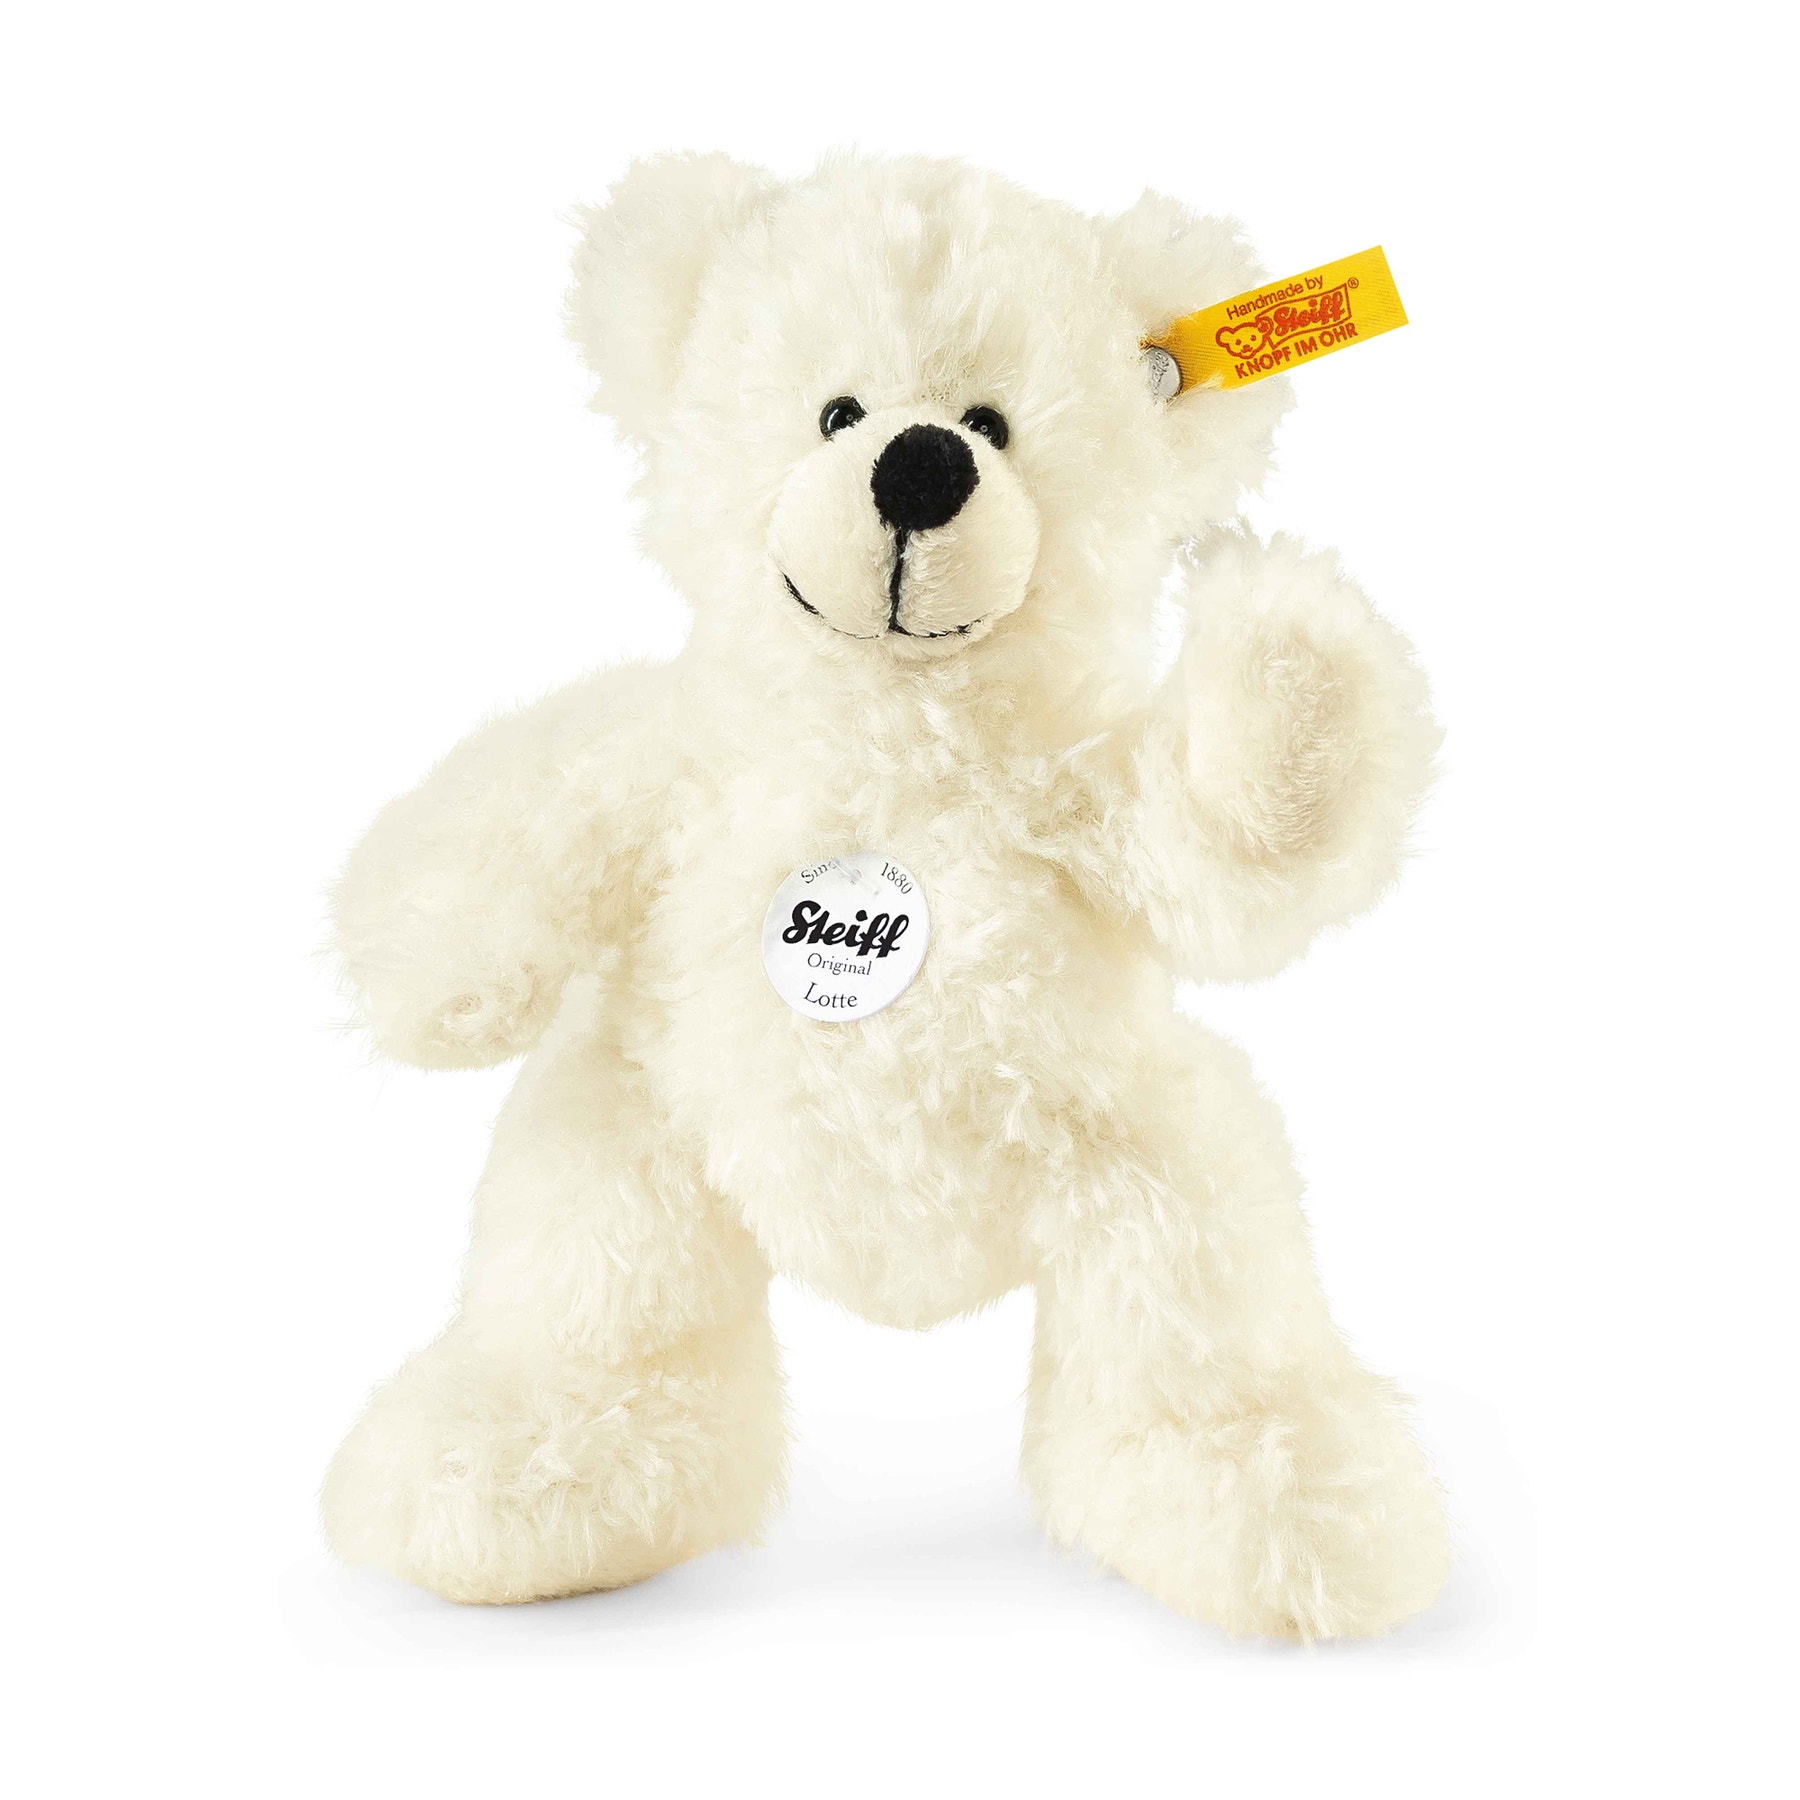 Teddy cm, white bear, 18 Lotte